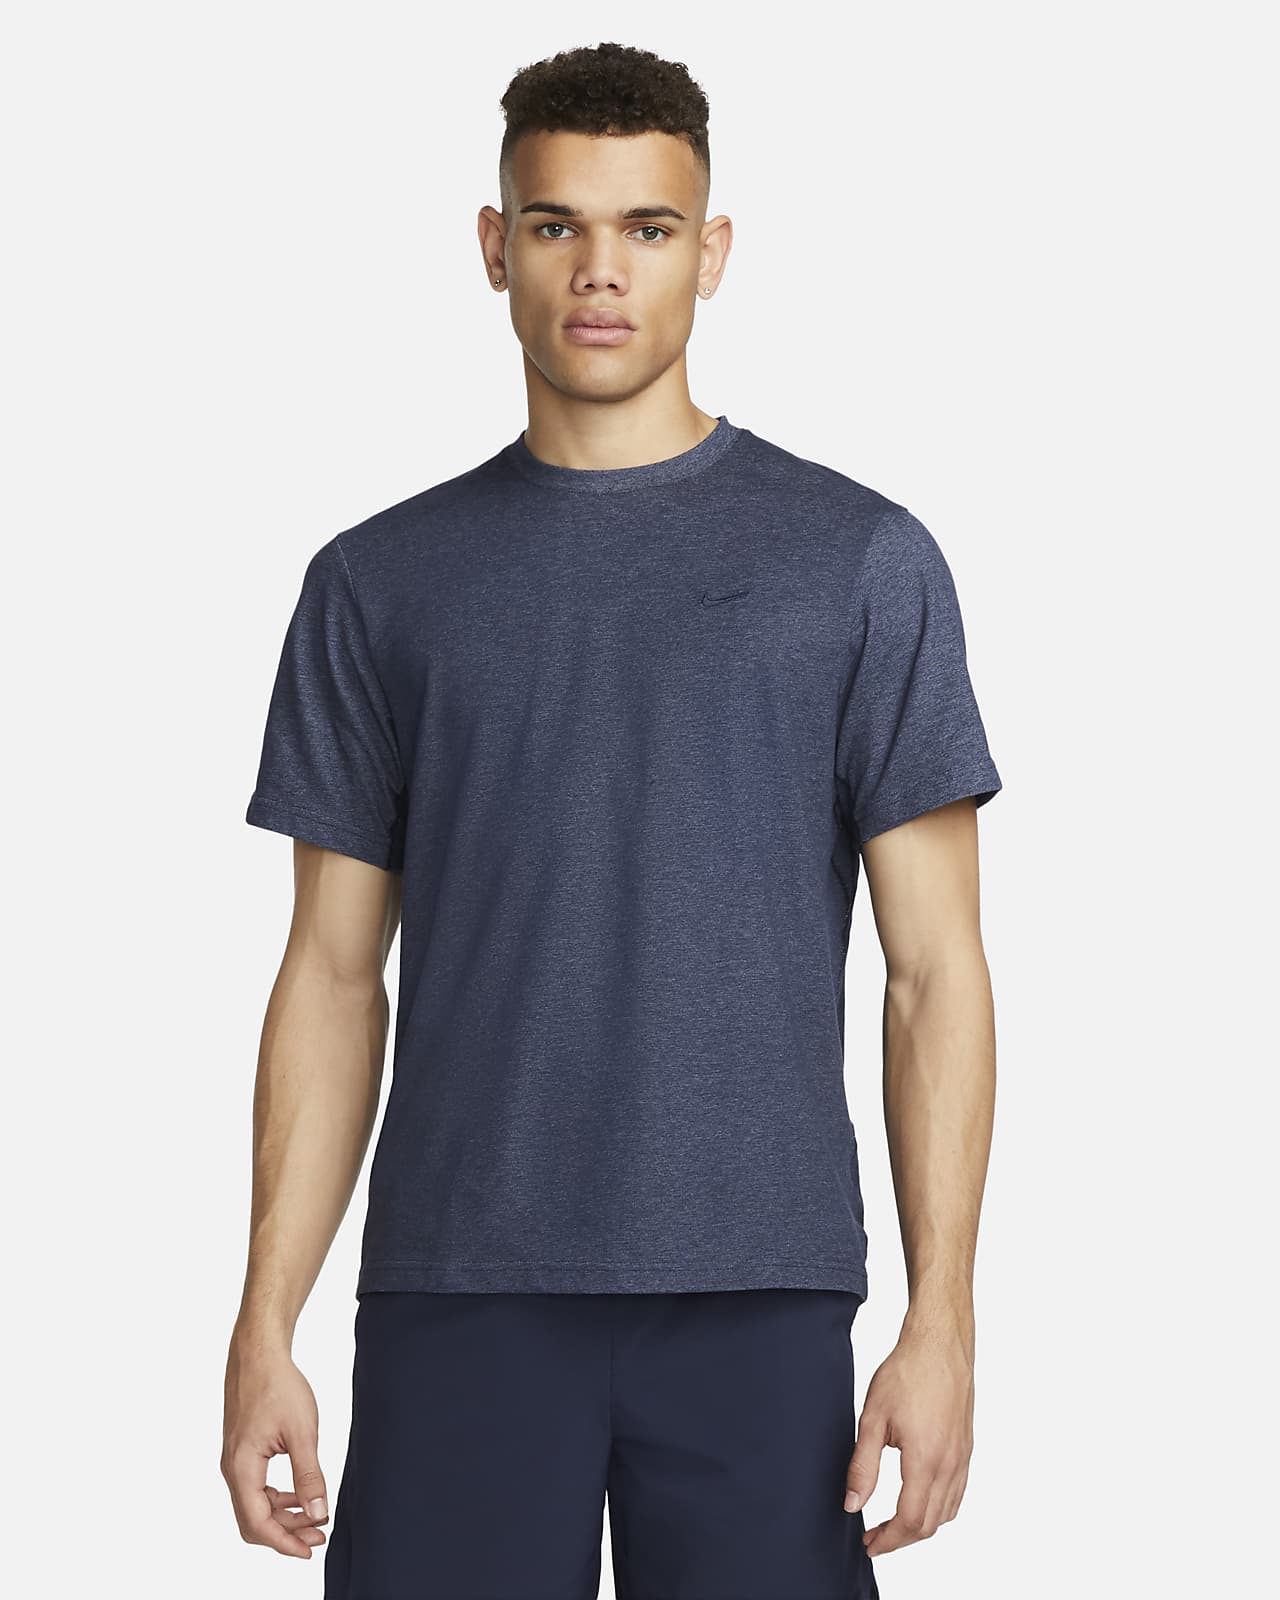 Nike Primary Men's Dri-FIT Short-sleeve Versatile Top